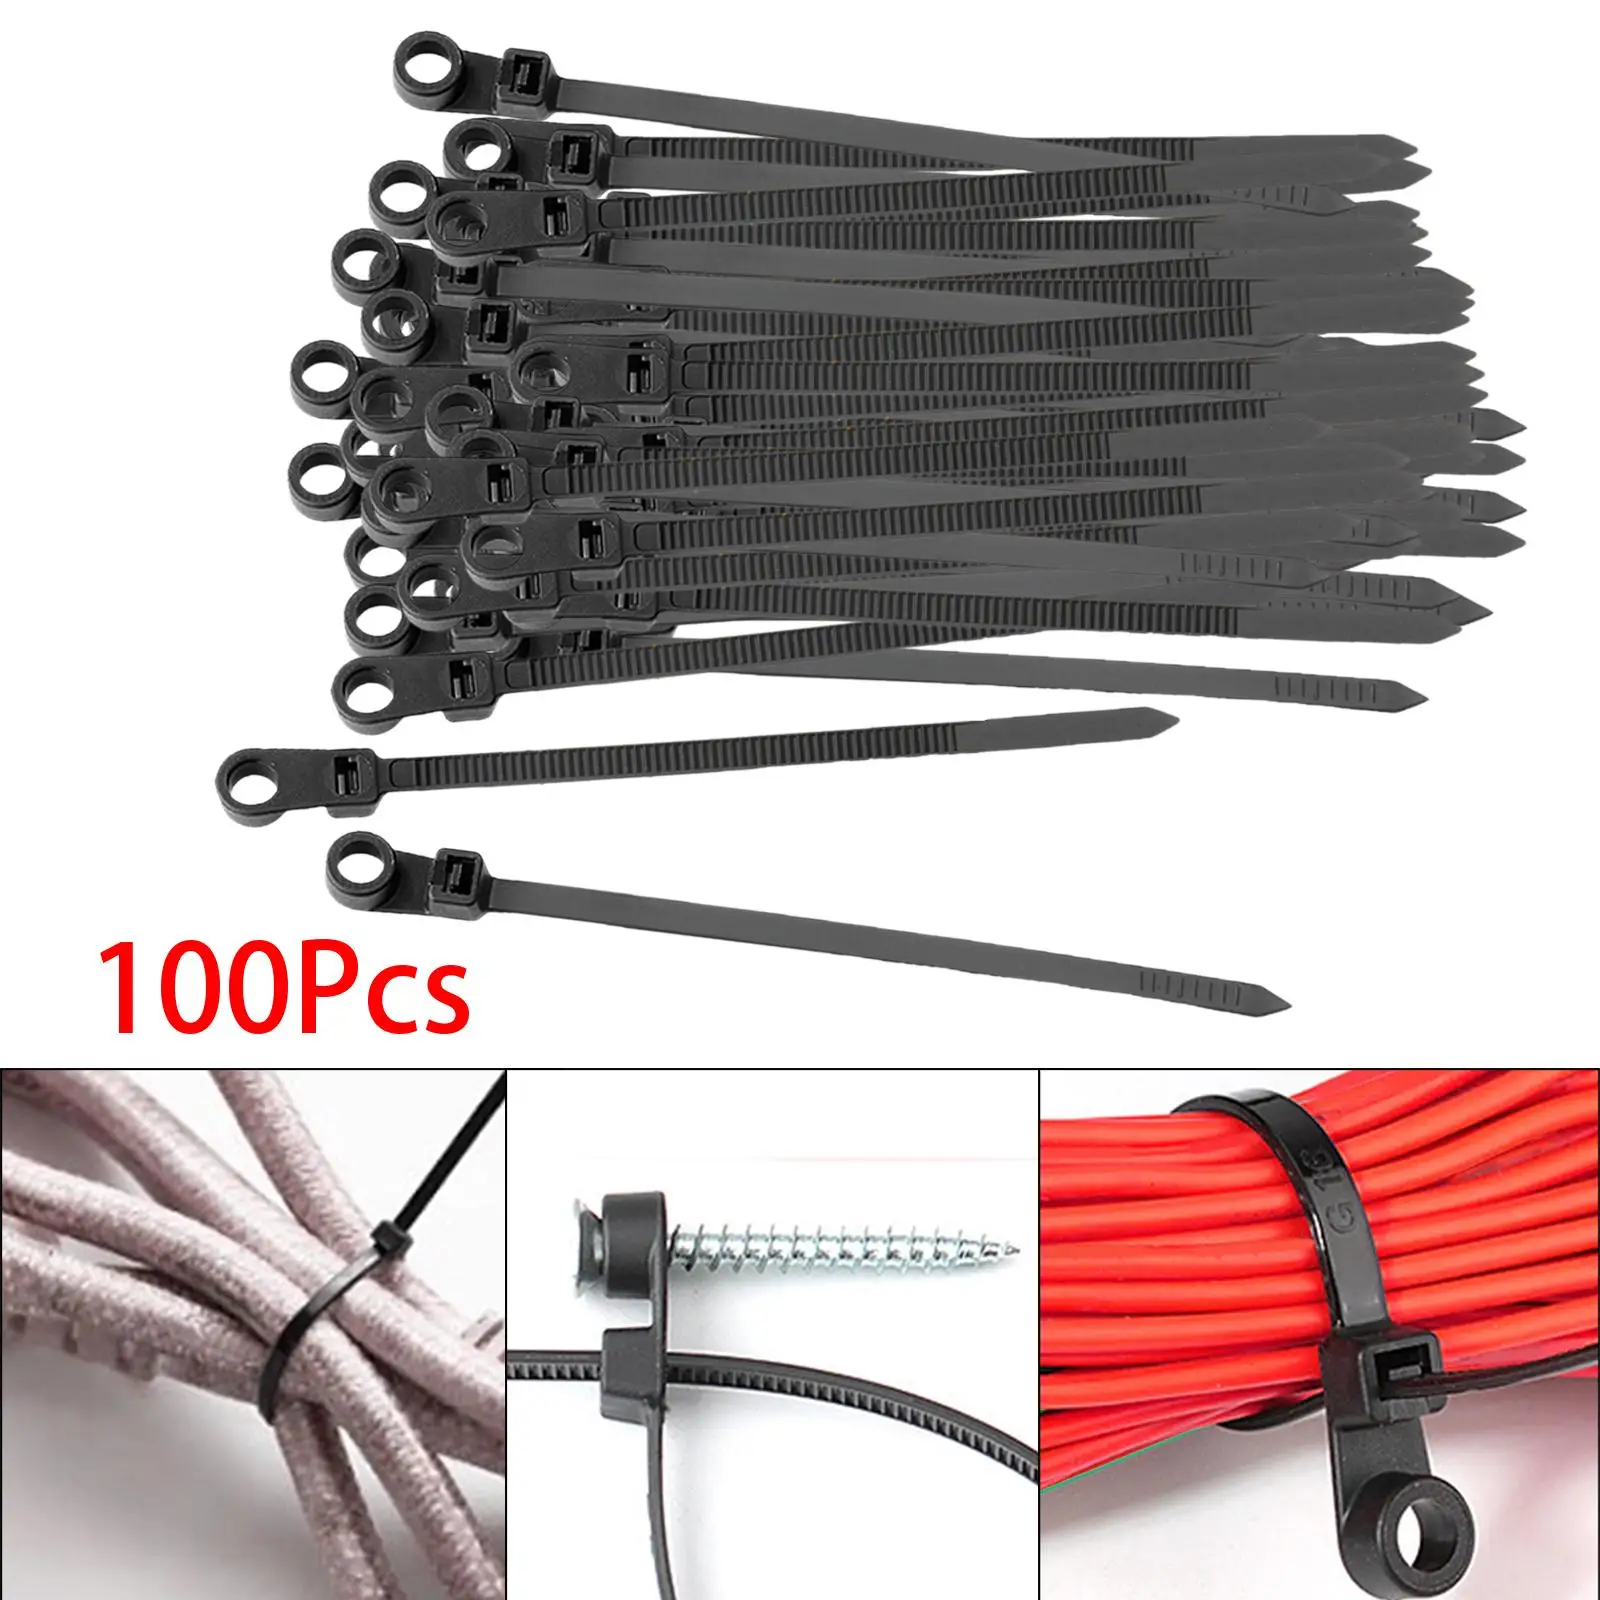 100x Nylon Cable Zips Wire Ties with Screw Hole Self Locking Tie Wraps for Home Garage Indoor Outdoor Garden Trellis Workshop